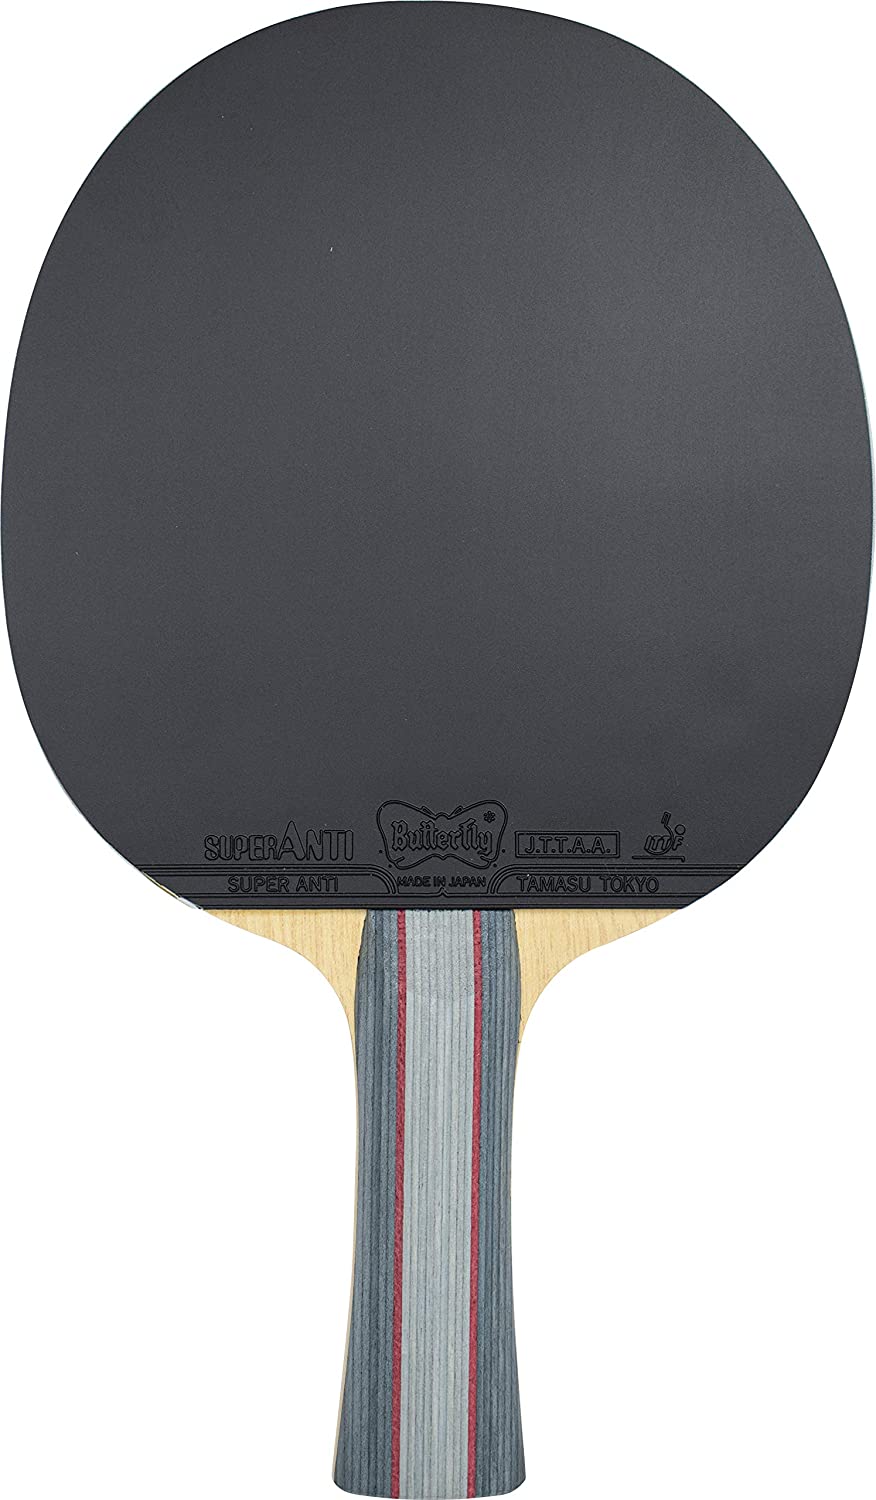 buy table tennis rubber online